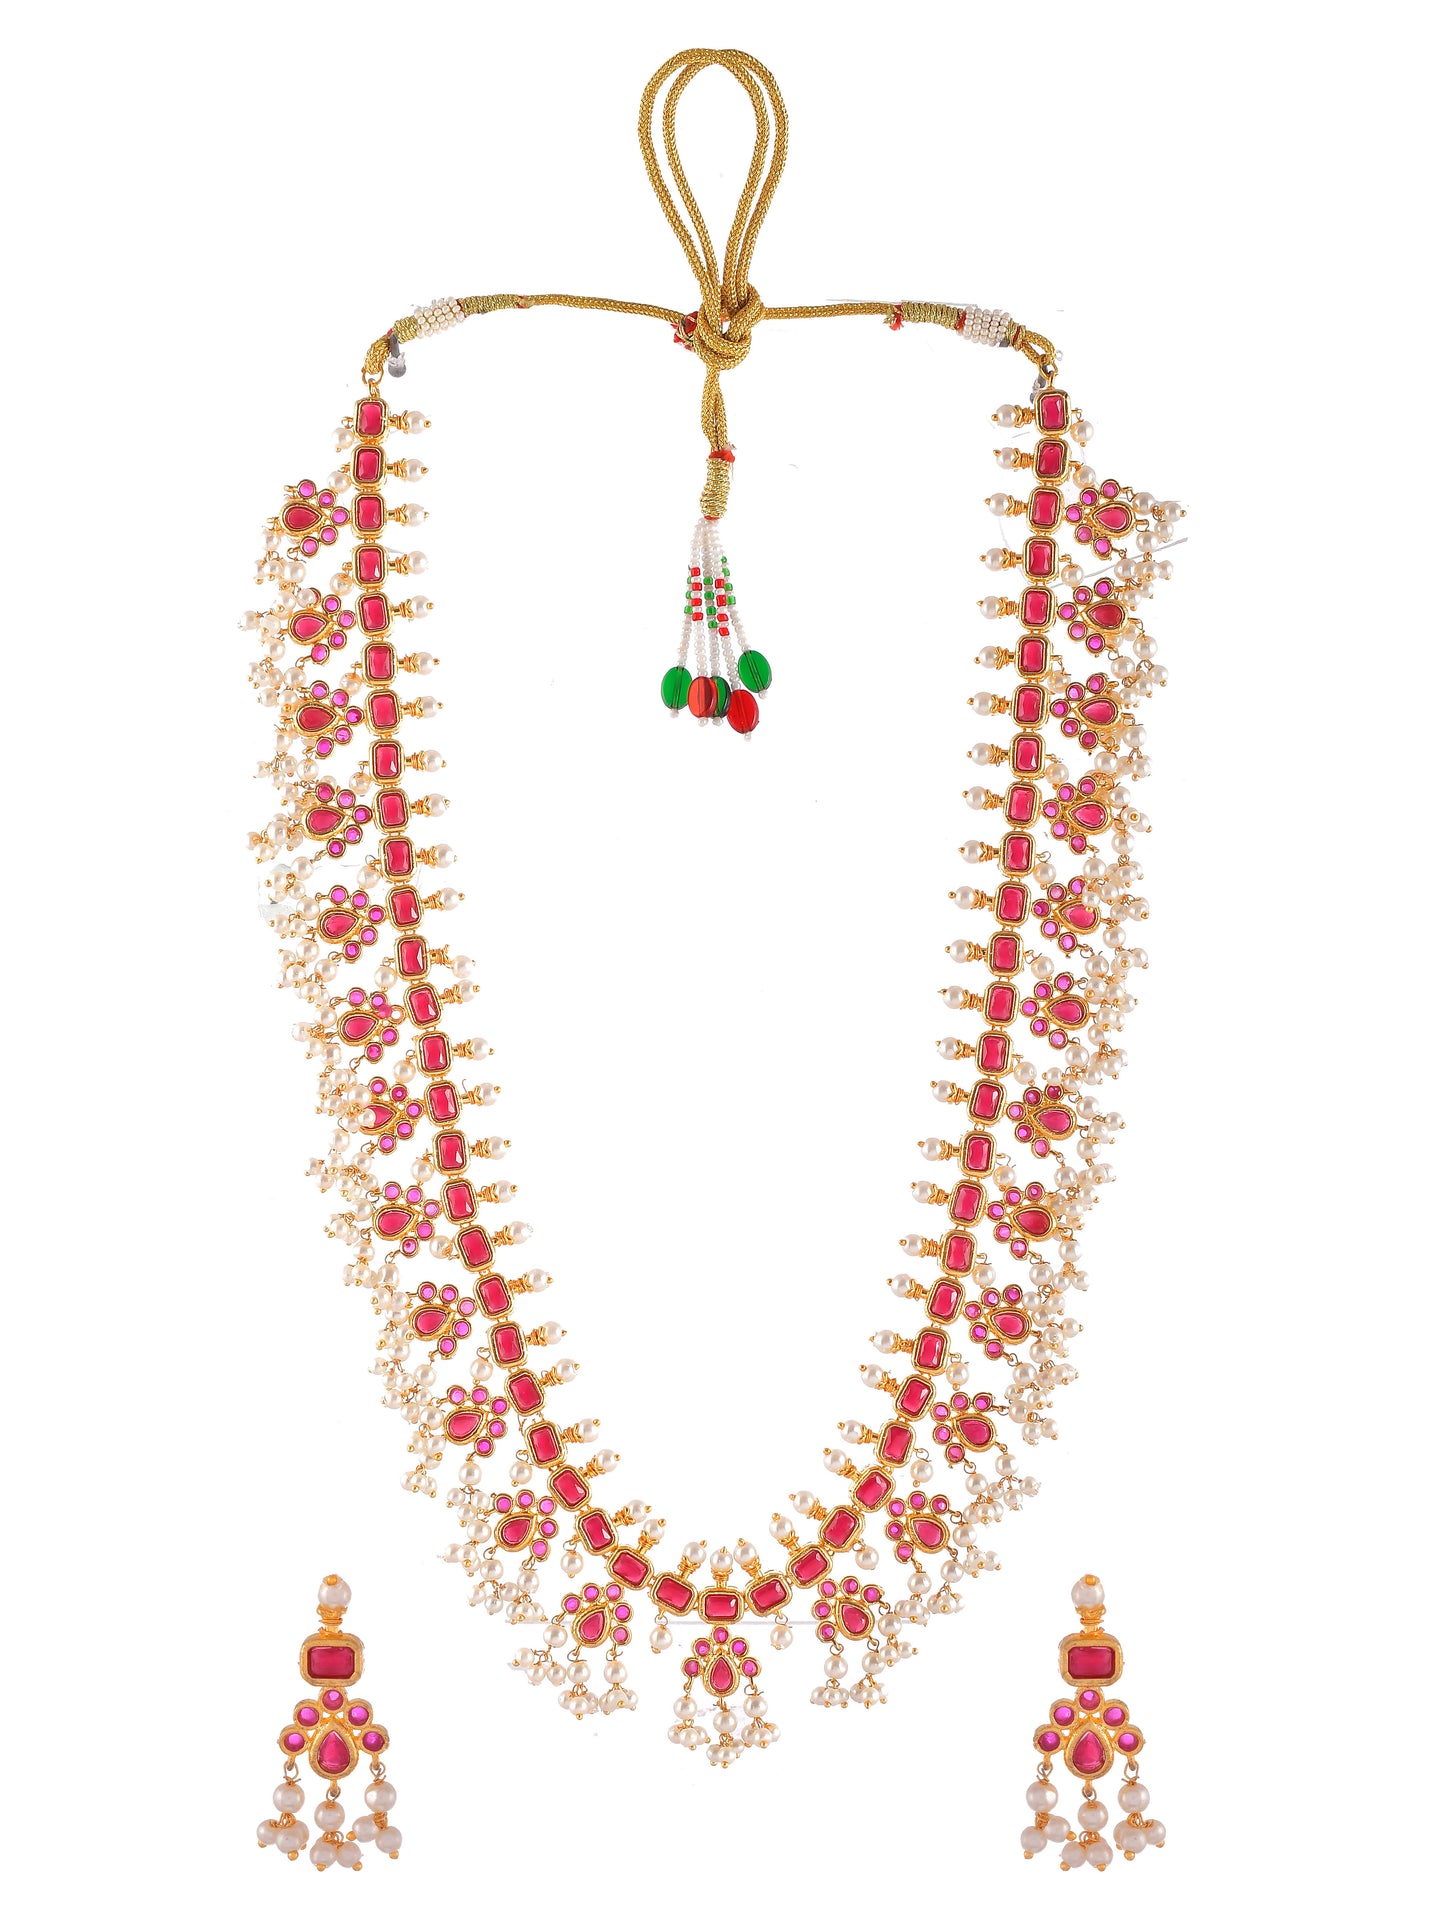 South Indian Kassumala Temple Jewellery Set